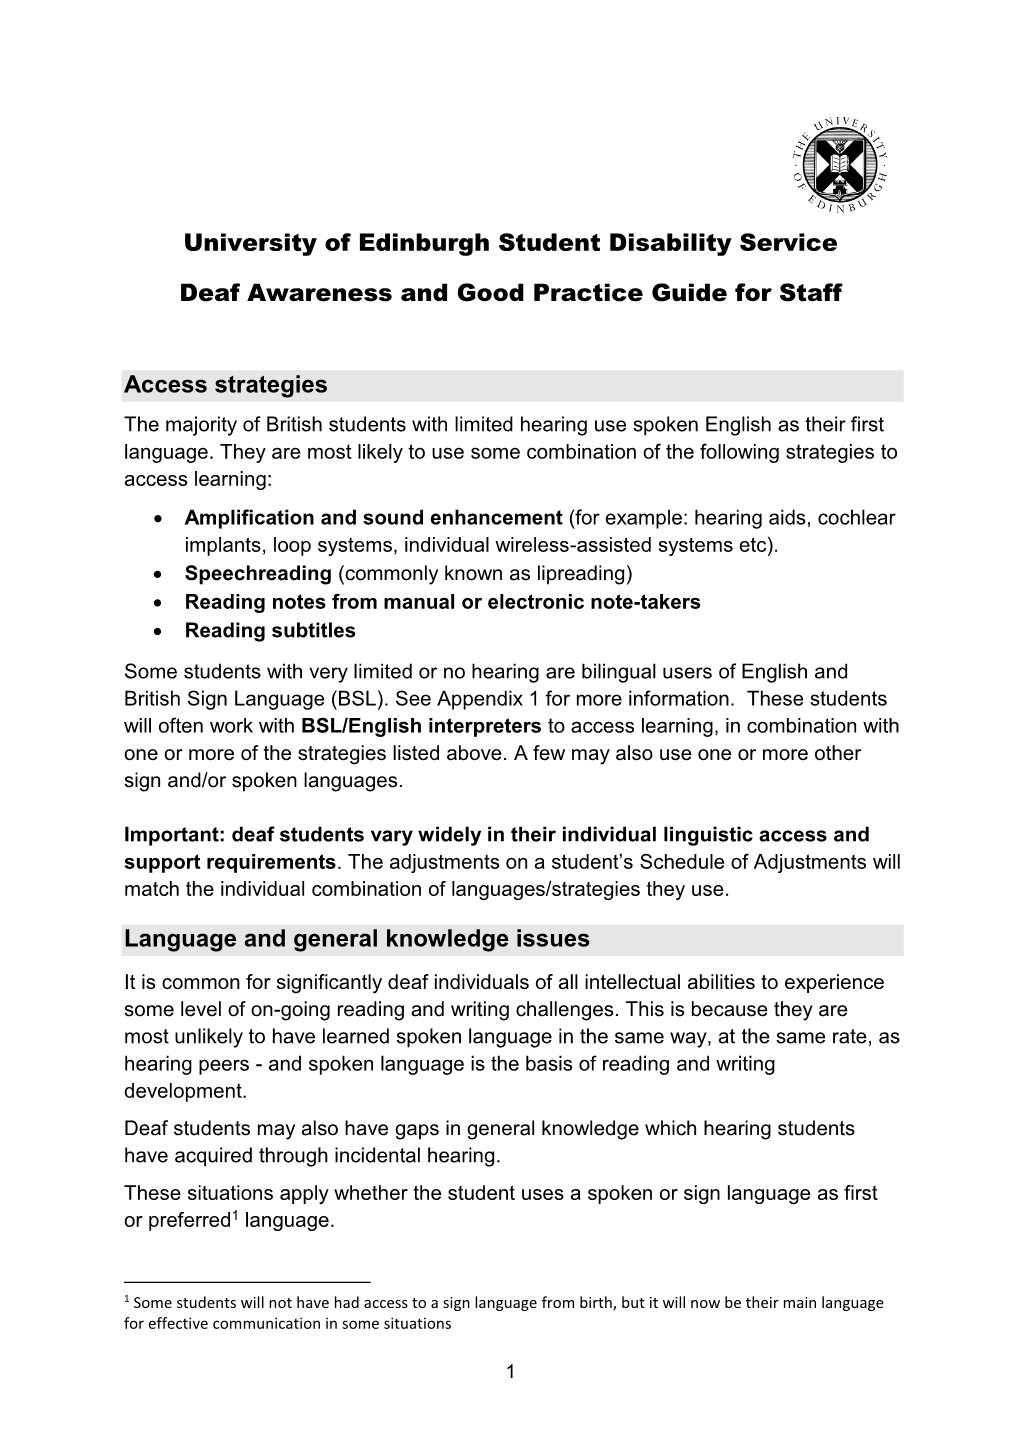 University of Edinburgh Student Disability Service Deaf Awareness